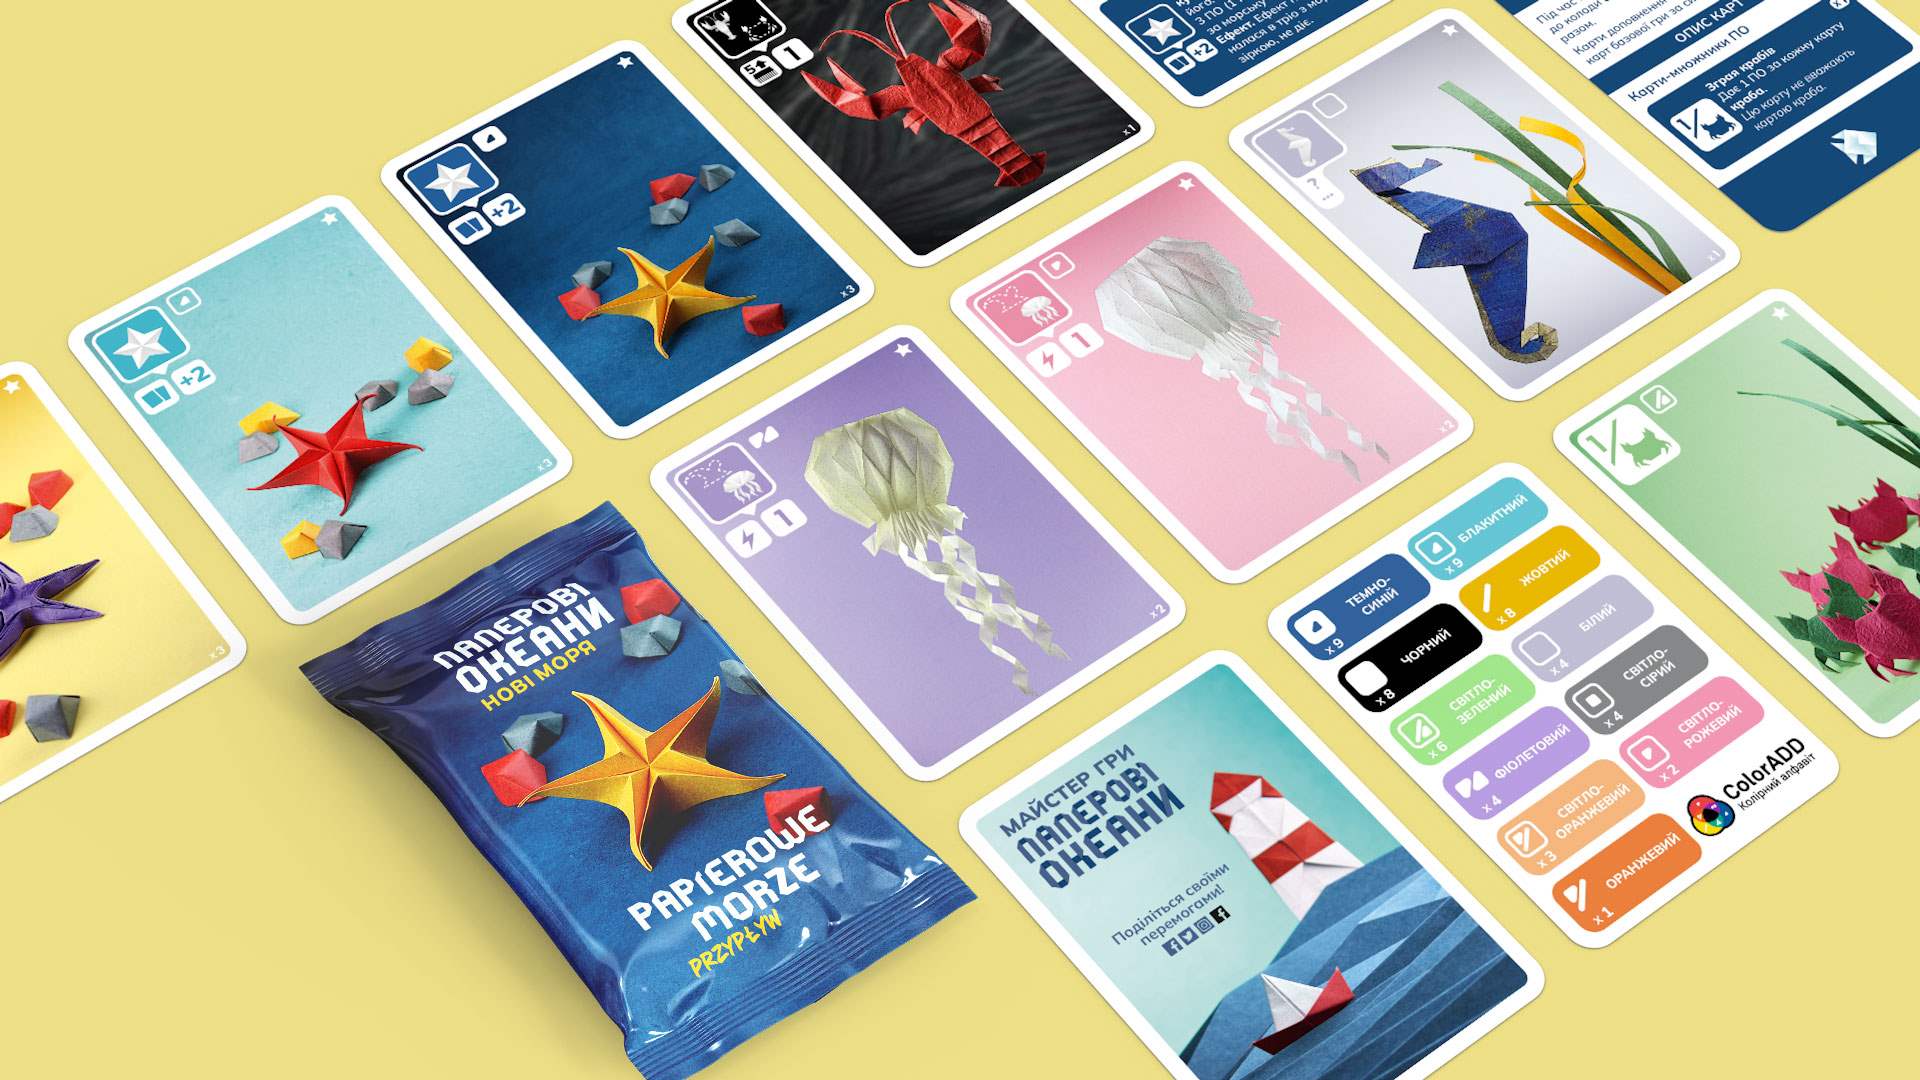 Настільна гра Паперові океани. Нові моря (Sea Salt & Paper: Extra Salt), бренду IGAMES, для 2-4 гравців, час гри < 30хв. - 2 - KUBIX 